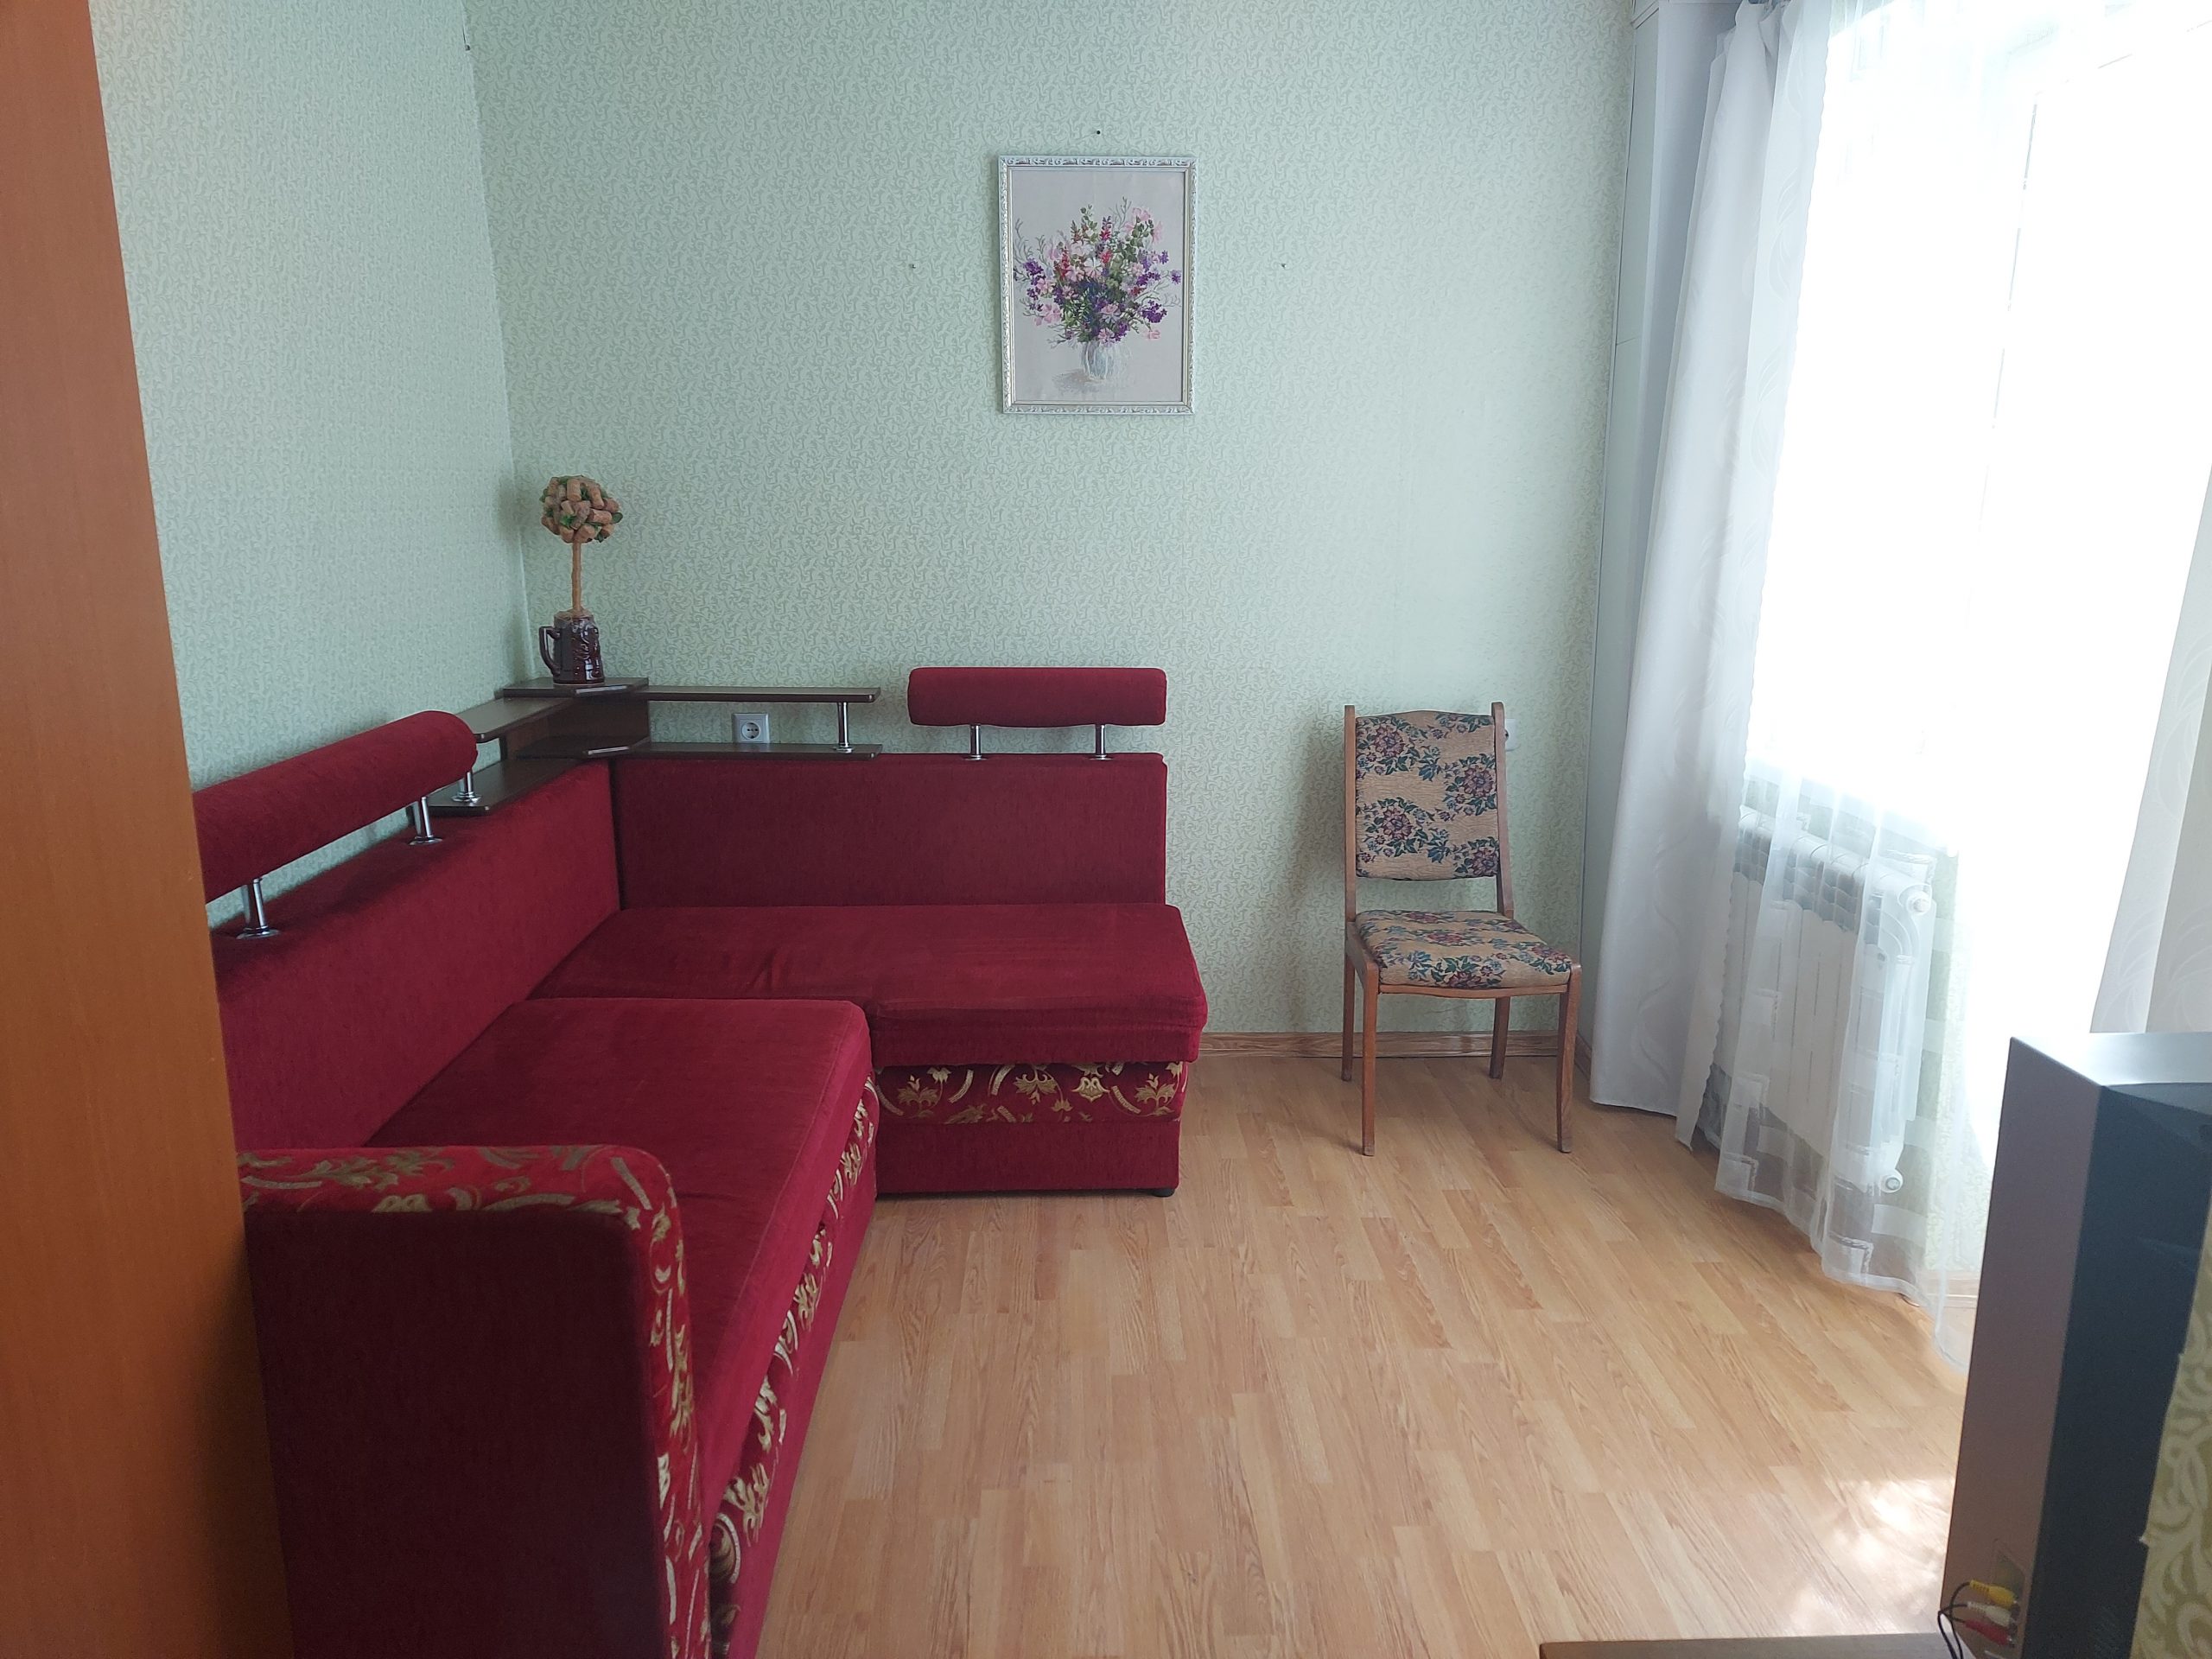 Однокомнатная квартира на Ул. Матвеева,14 (20кв.м) до 2 гостей